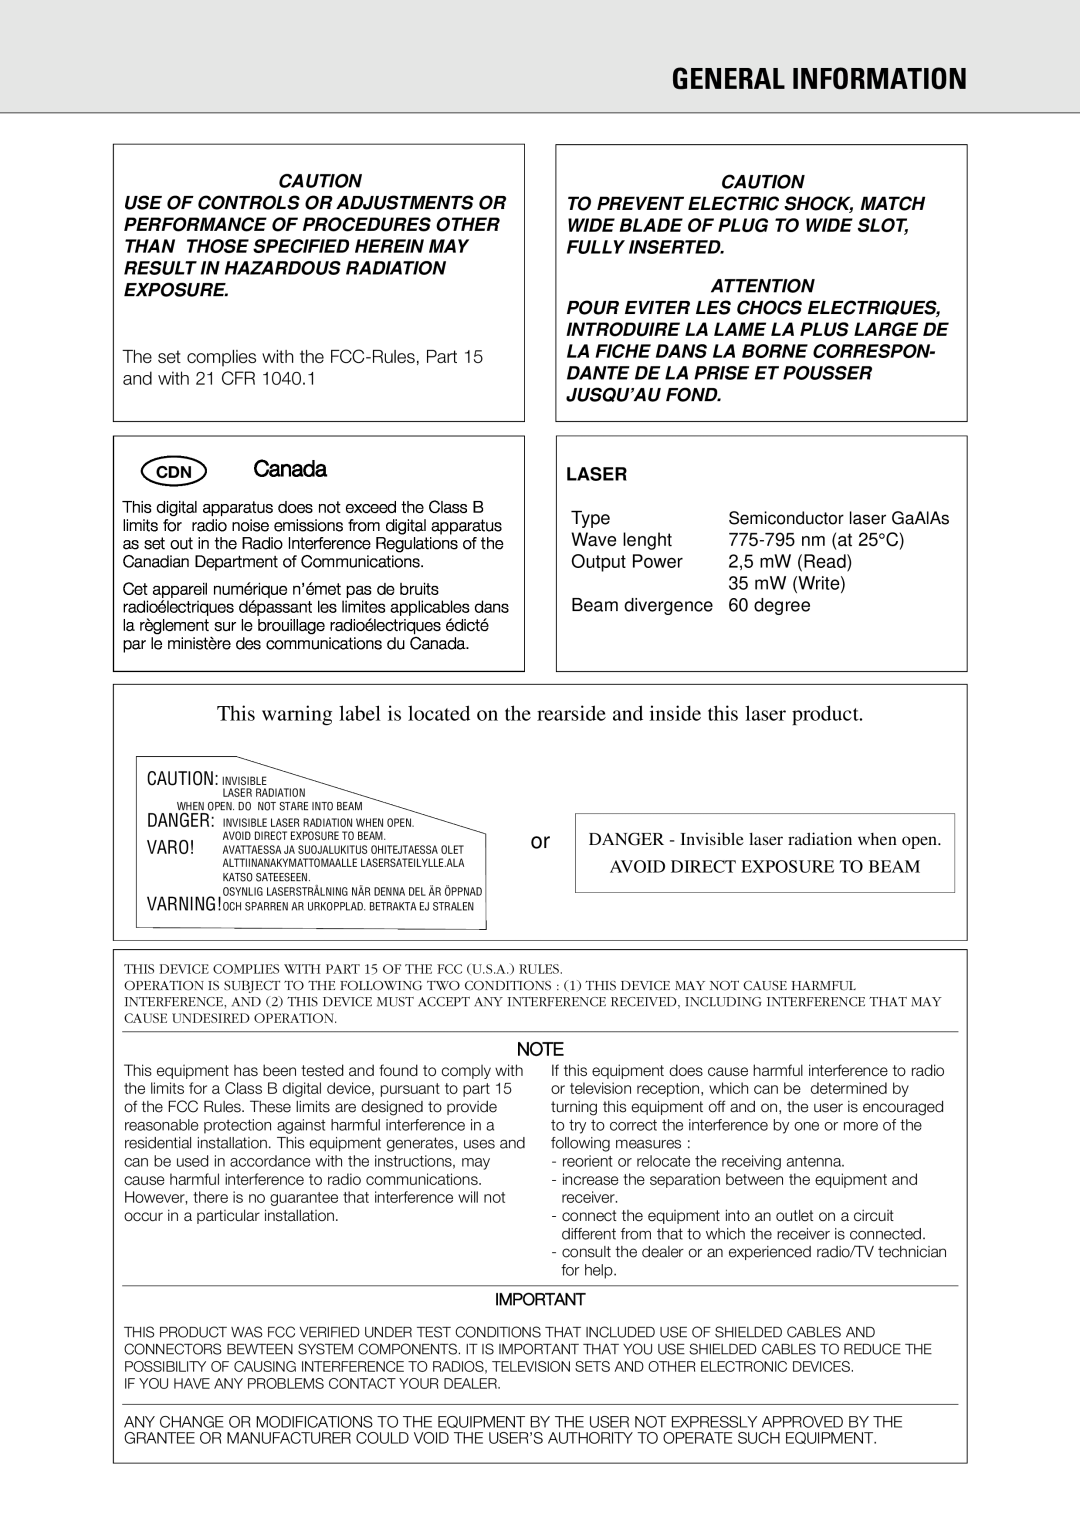 Philips 765 manual General Information, CDN Canada, Laser 